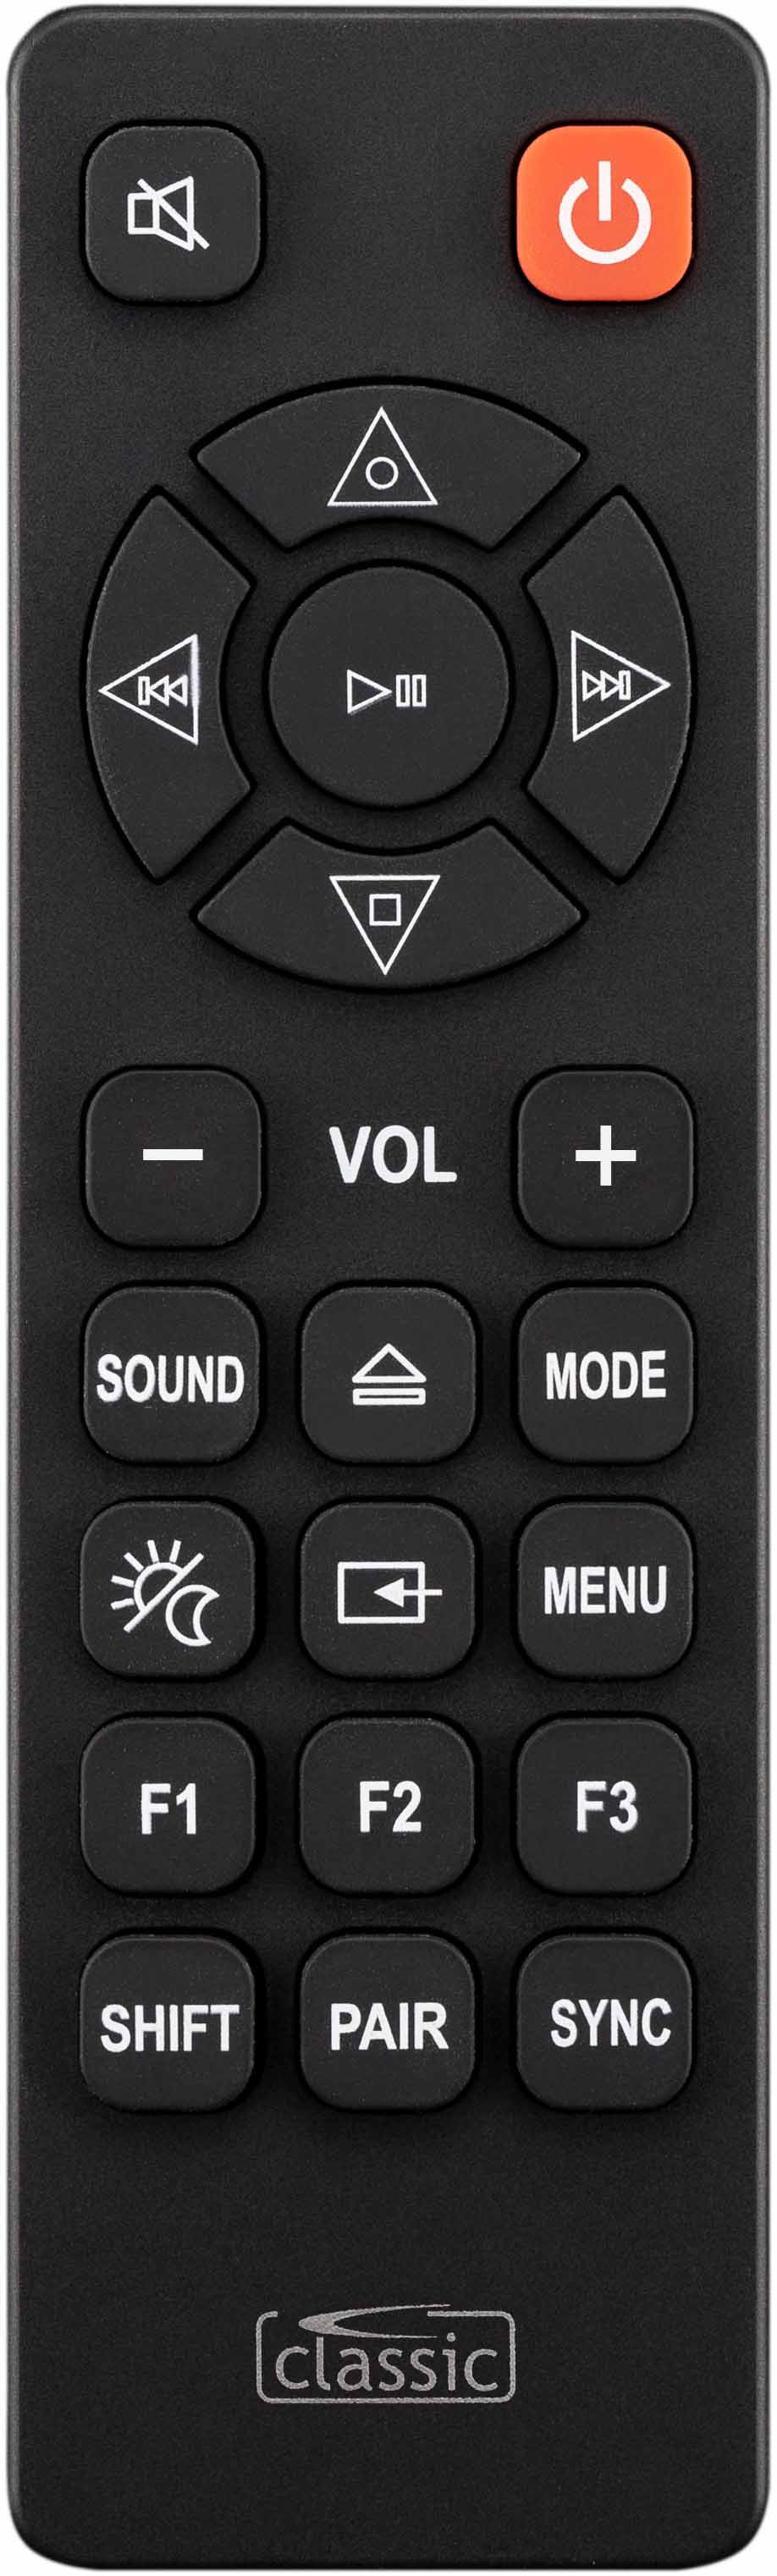 JVC RM-STHW513B Remote Control Alternative